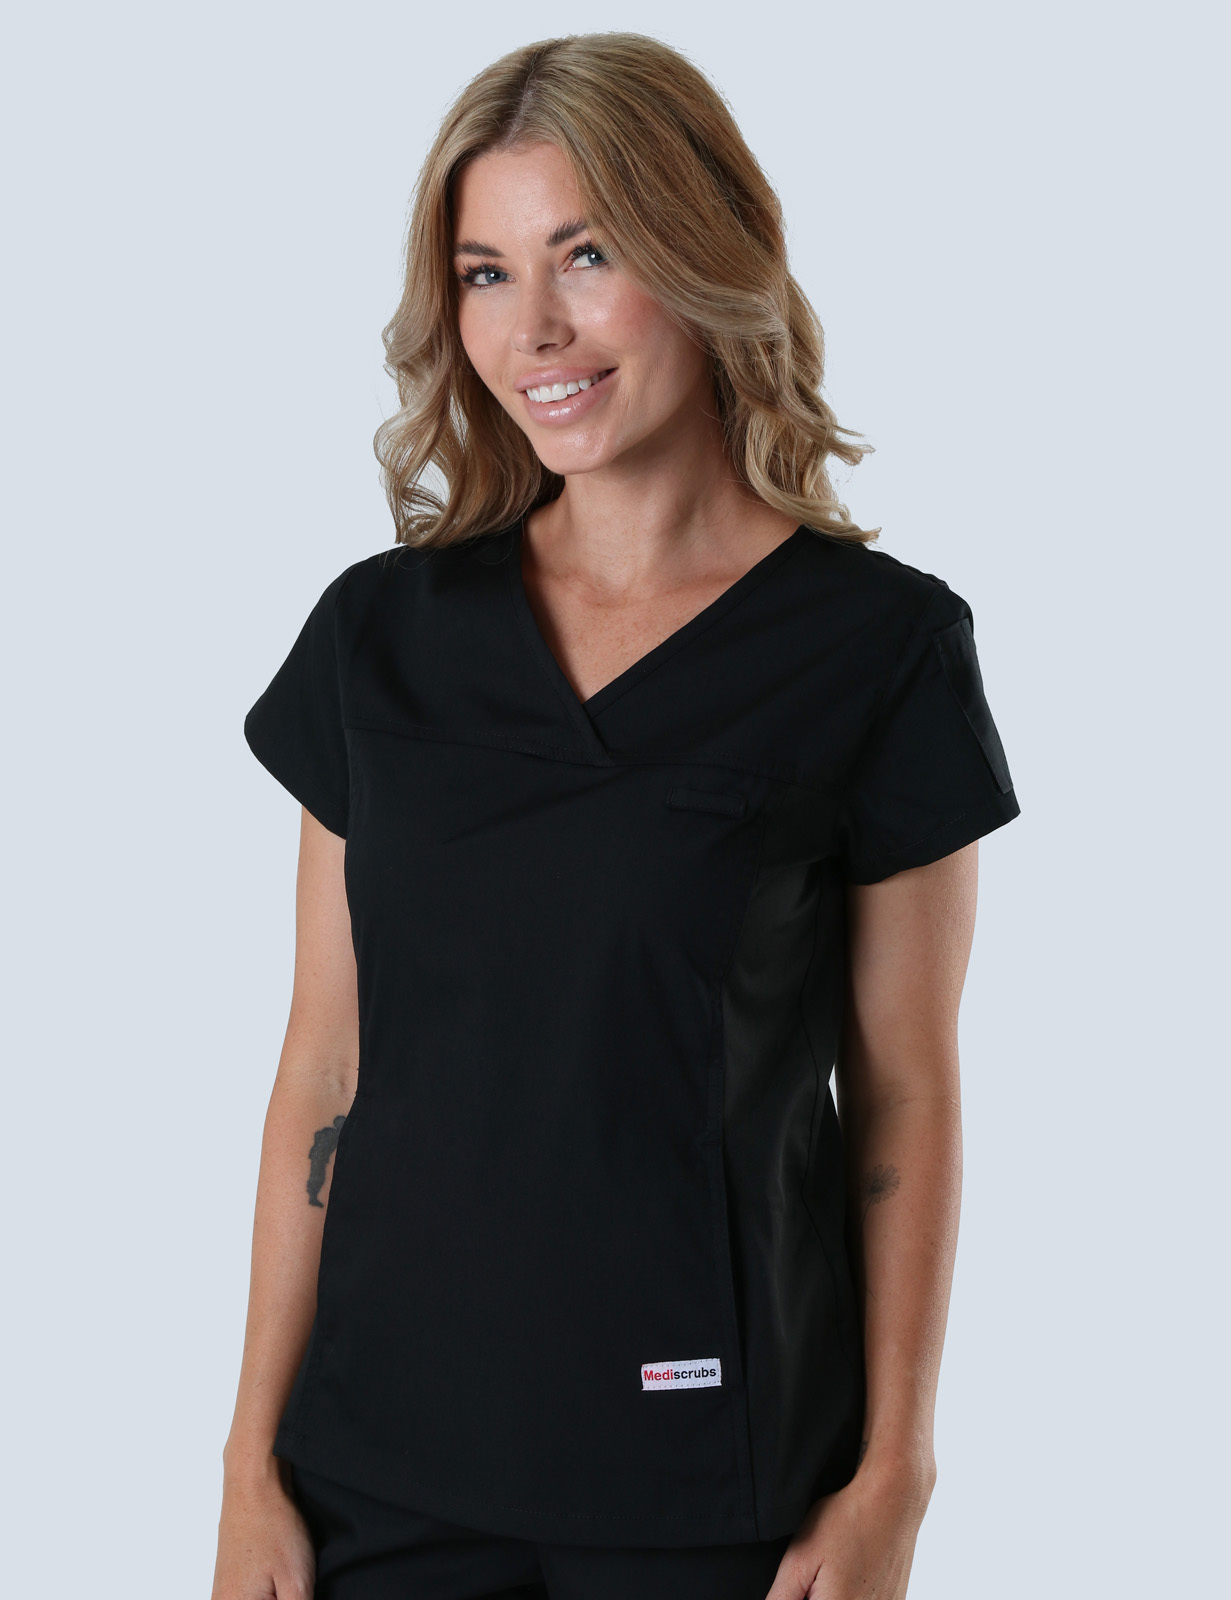 Logan Hospital - MI Assistant (Women's Fit Spandex Scub Top in Black incl Logos)